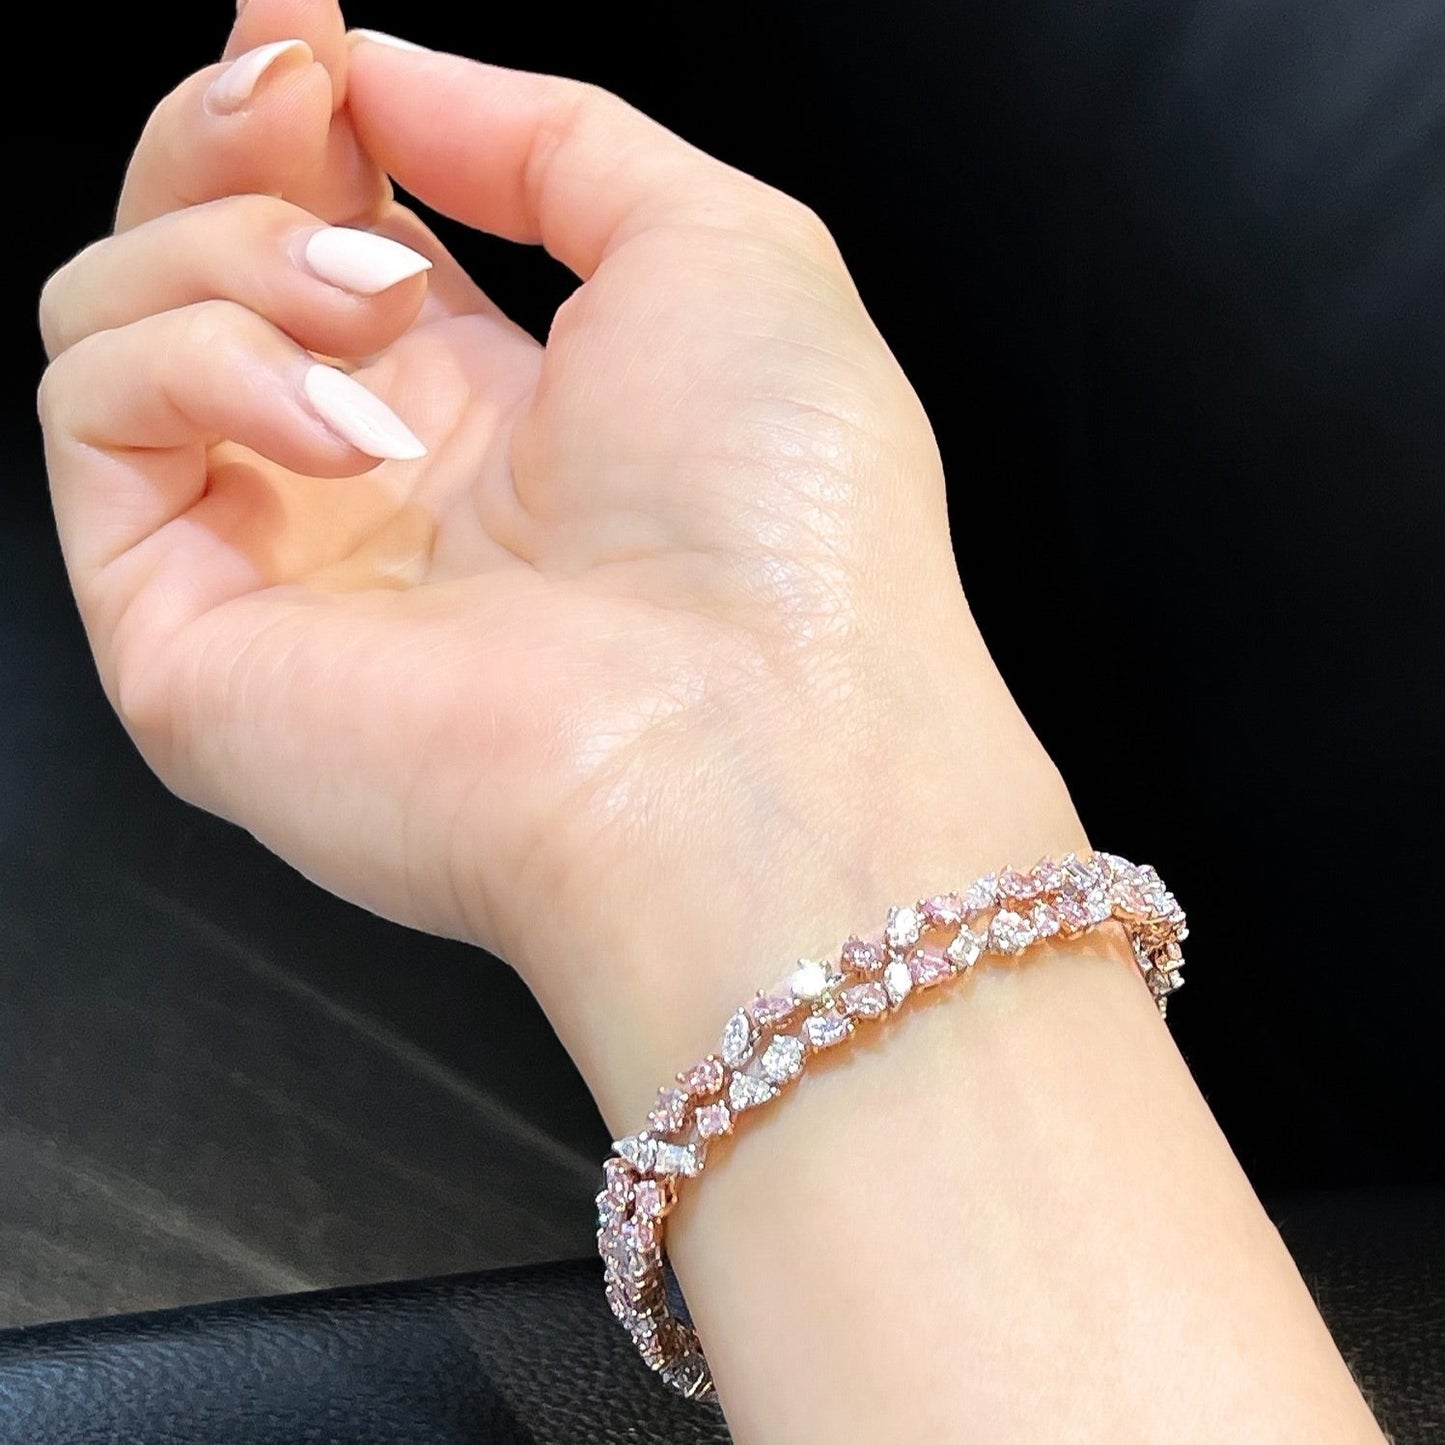 Pink diamond bracelet. pink diamond pear shape bracelet. Pink tennis bracelet. Natural pink diamond bracelet. Multi row pink diamond bracelet. Pink diamond jewelry 